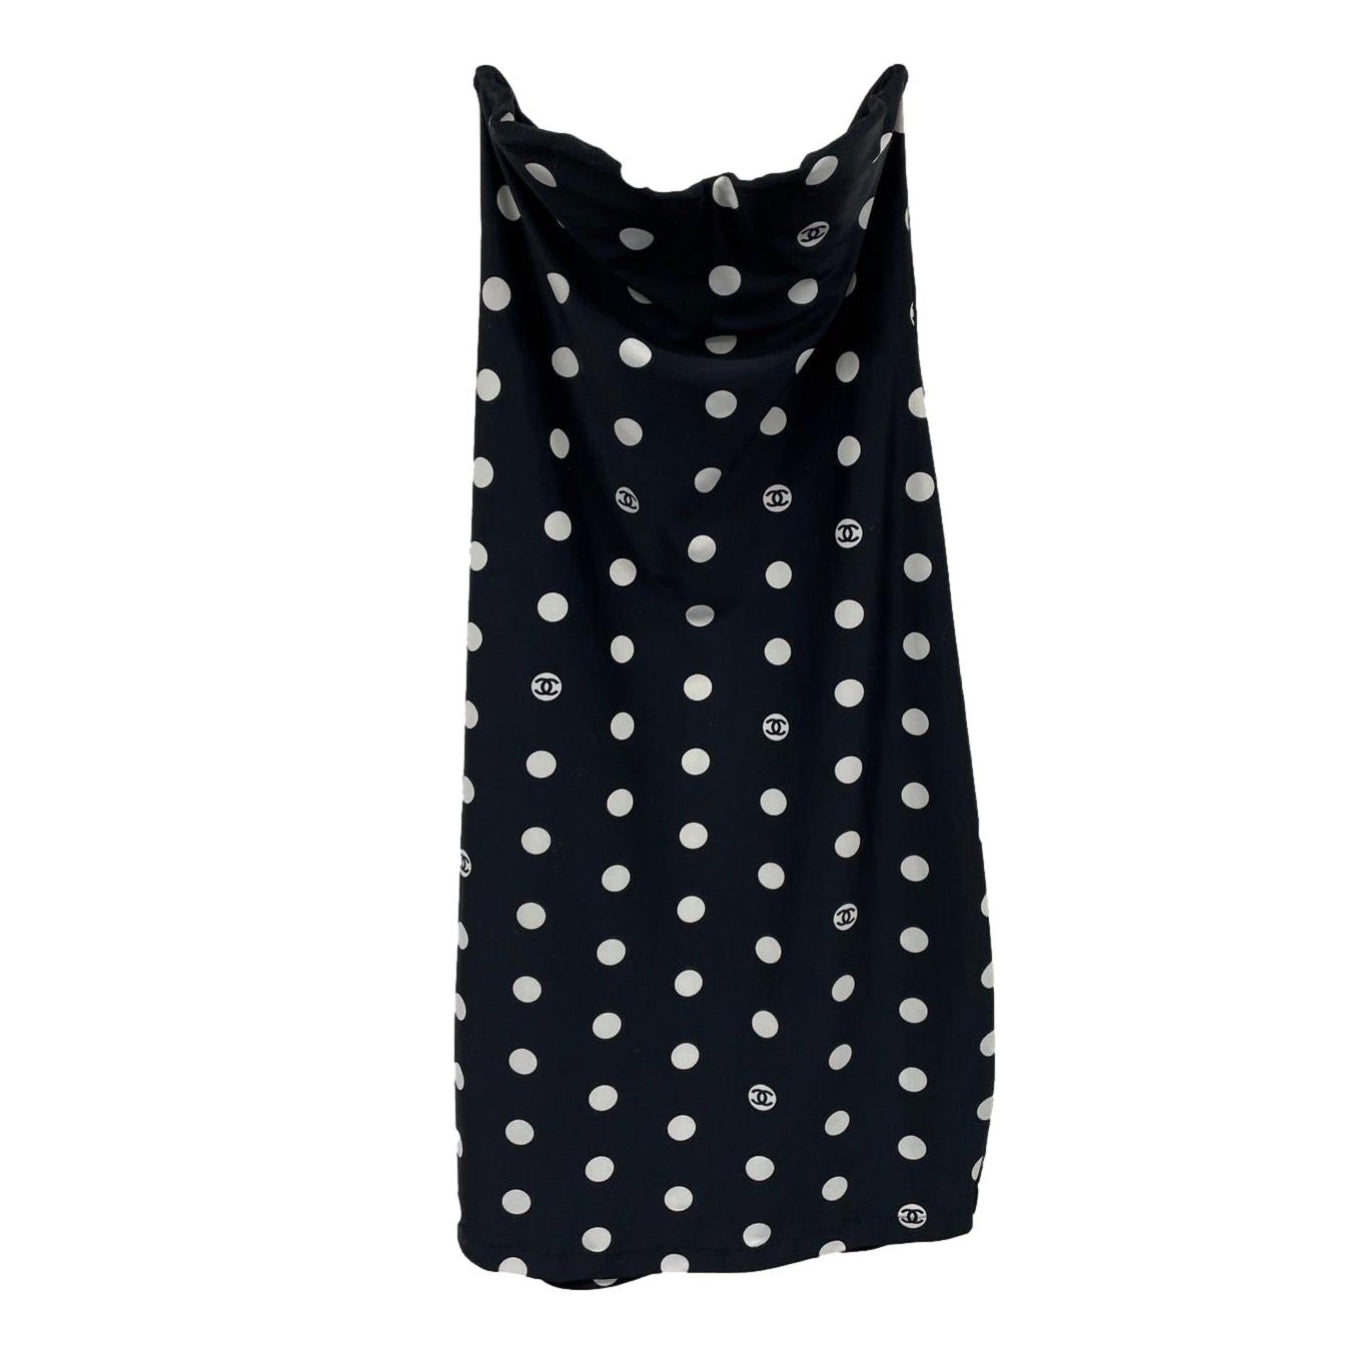 Chanel Black Polka Dot Dress